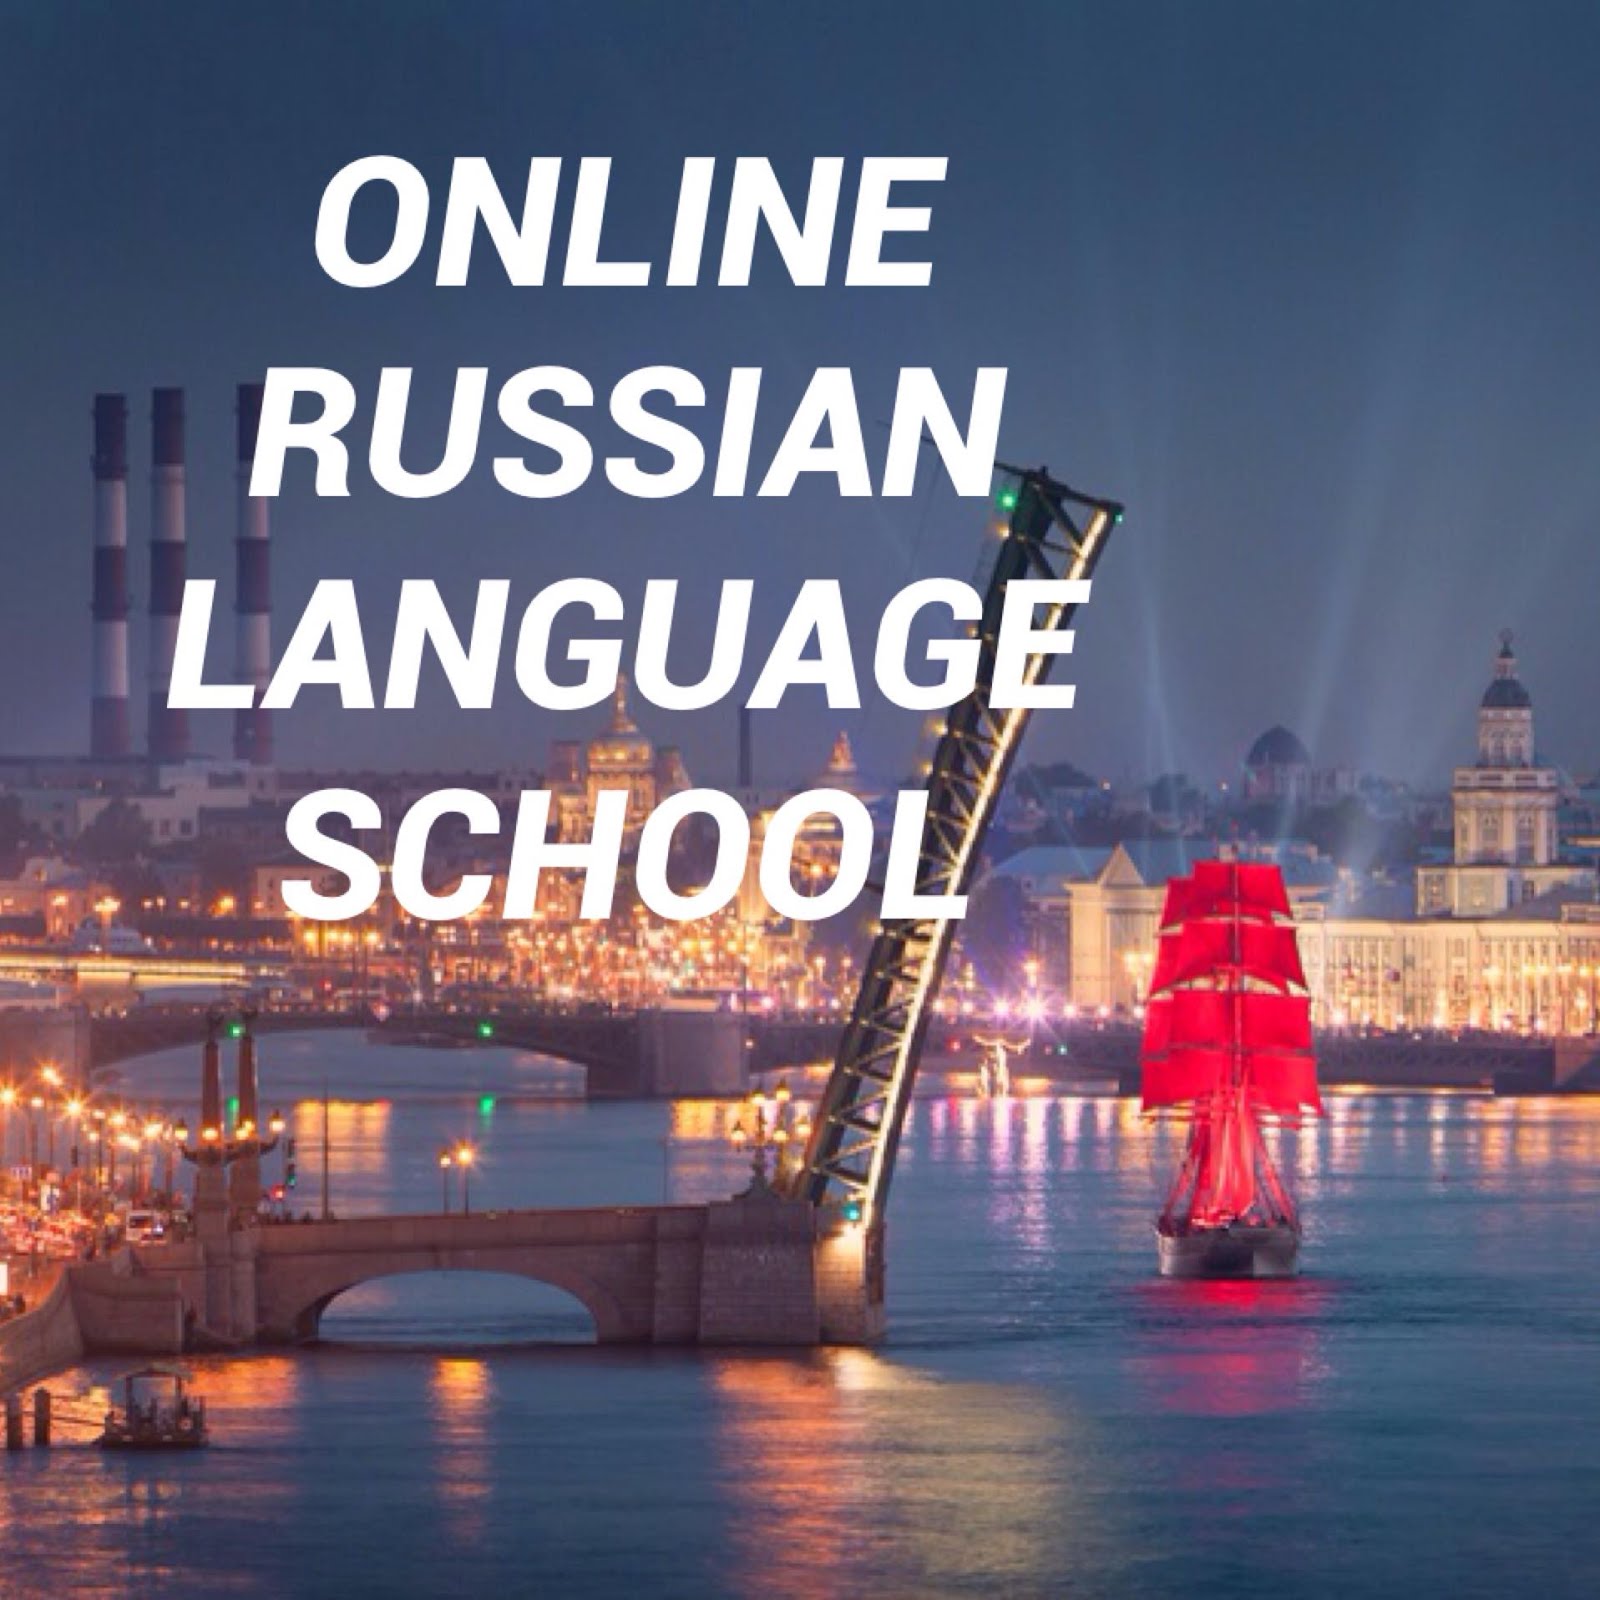 ONLINE RUSSIAN LANGUAGE SCHOOL ON FACEBOOK